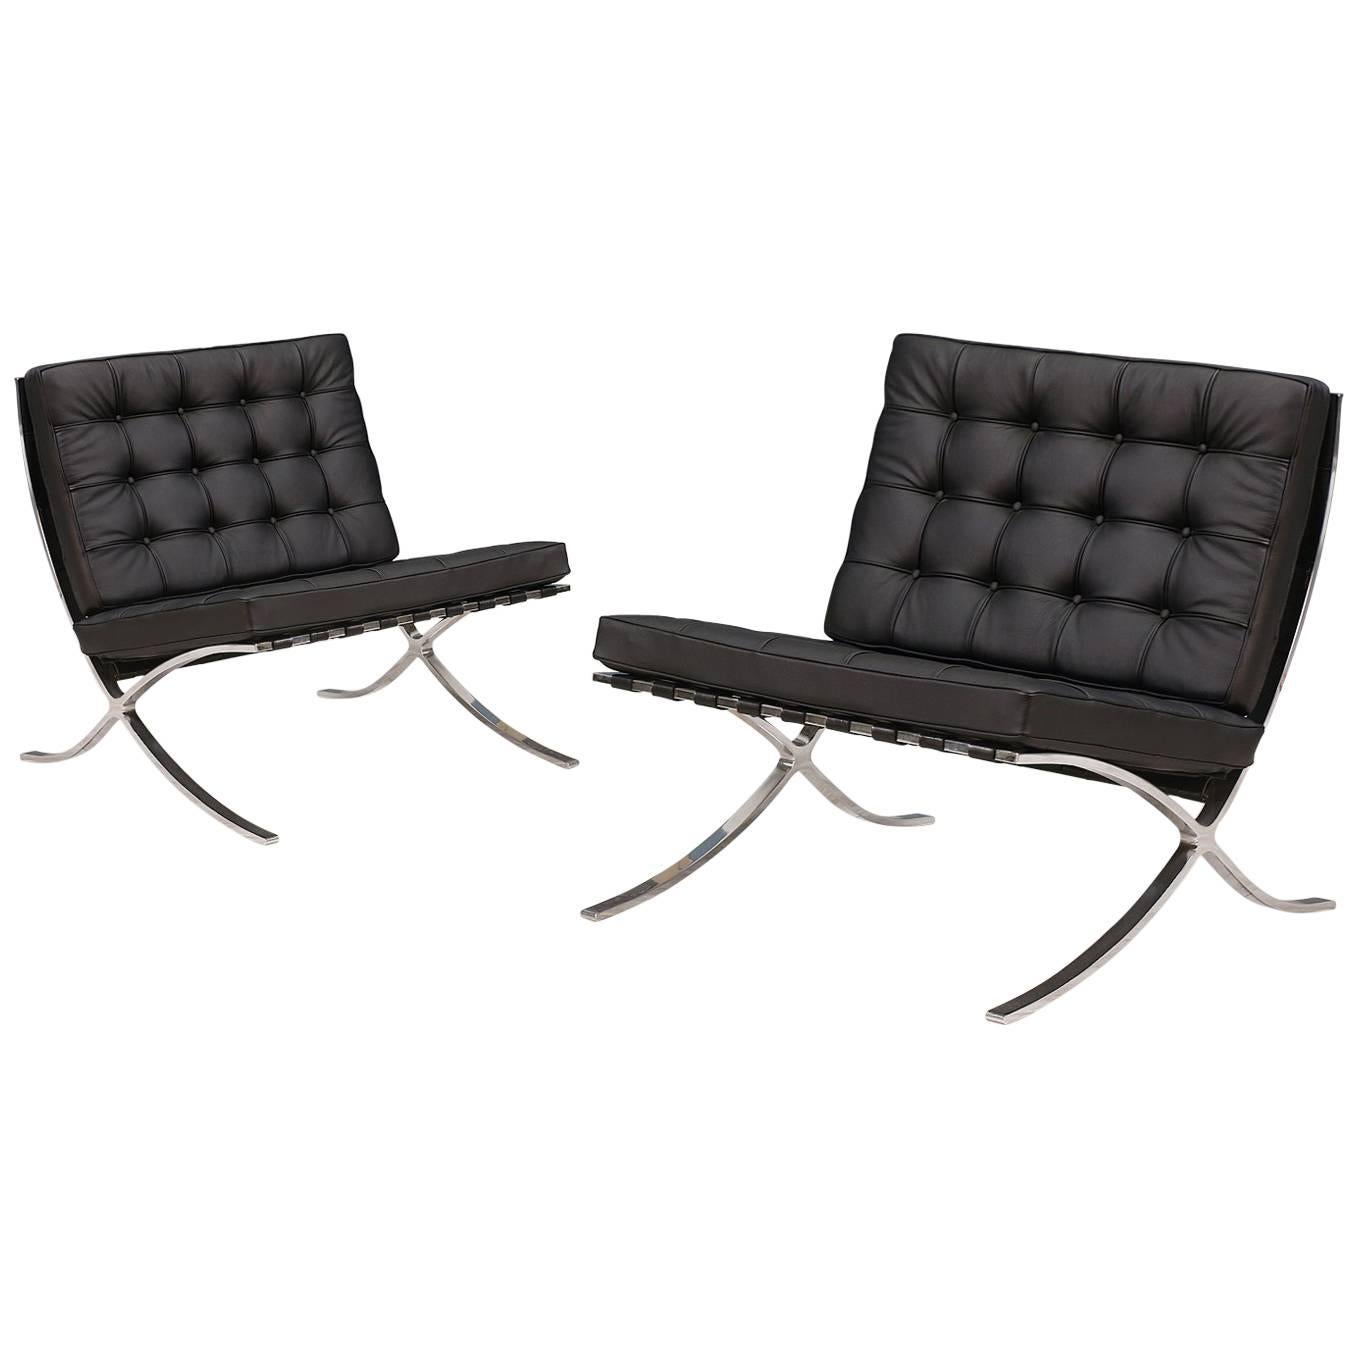 Original Ludwig Mies van der Rohe “Barcelona” Lounge Chairs for Knoll